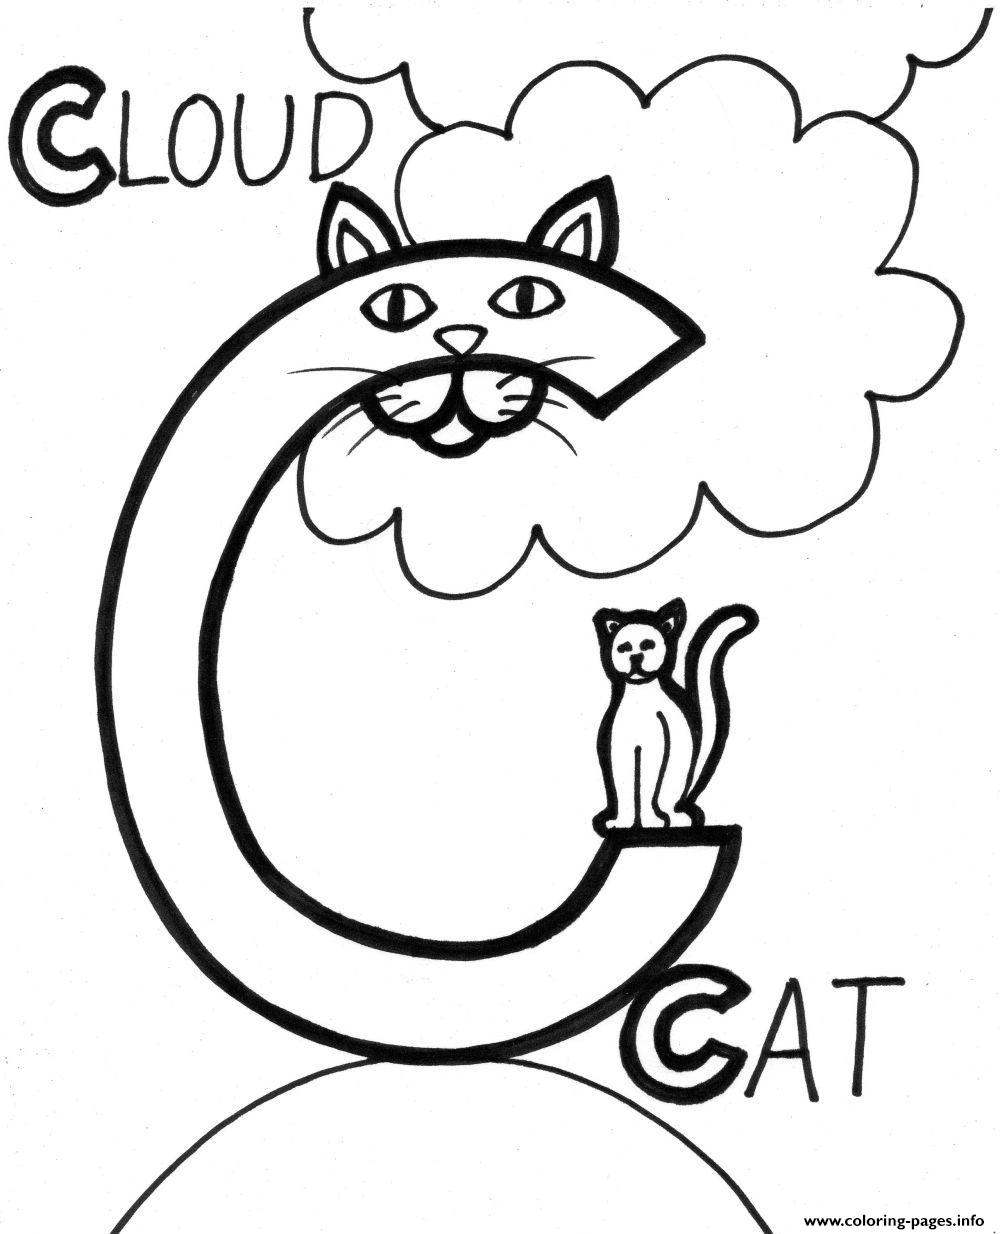 Cloud And Cat S Alphabet9a5f coloring